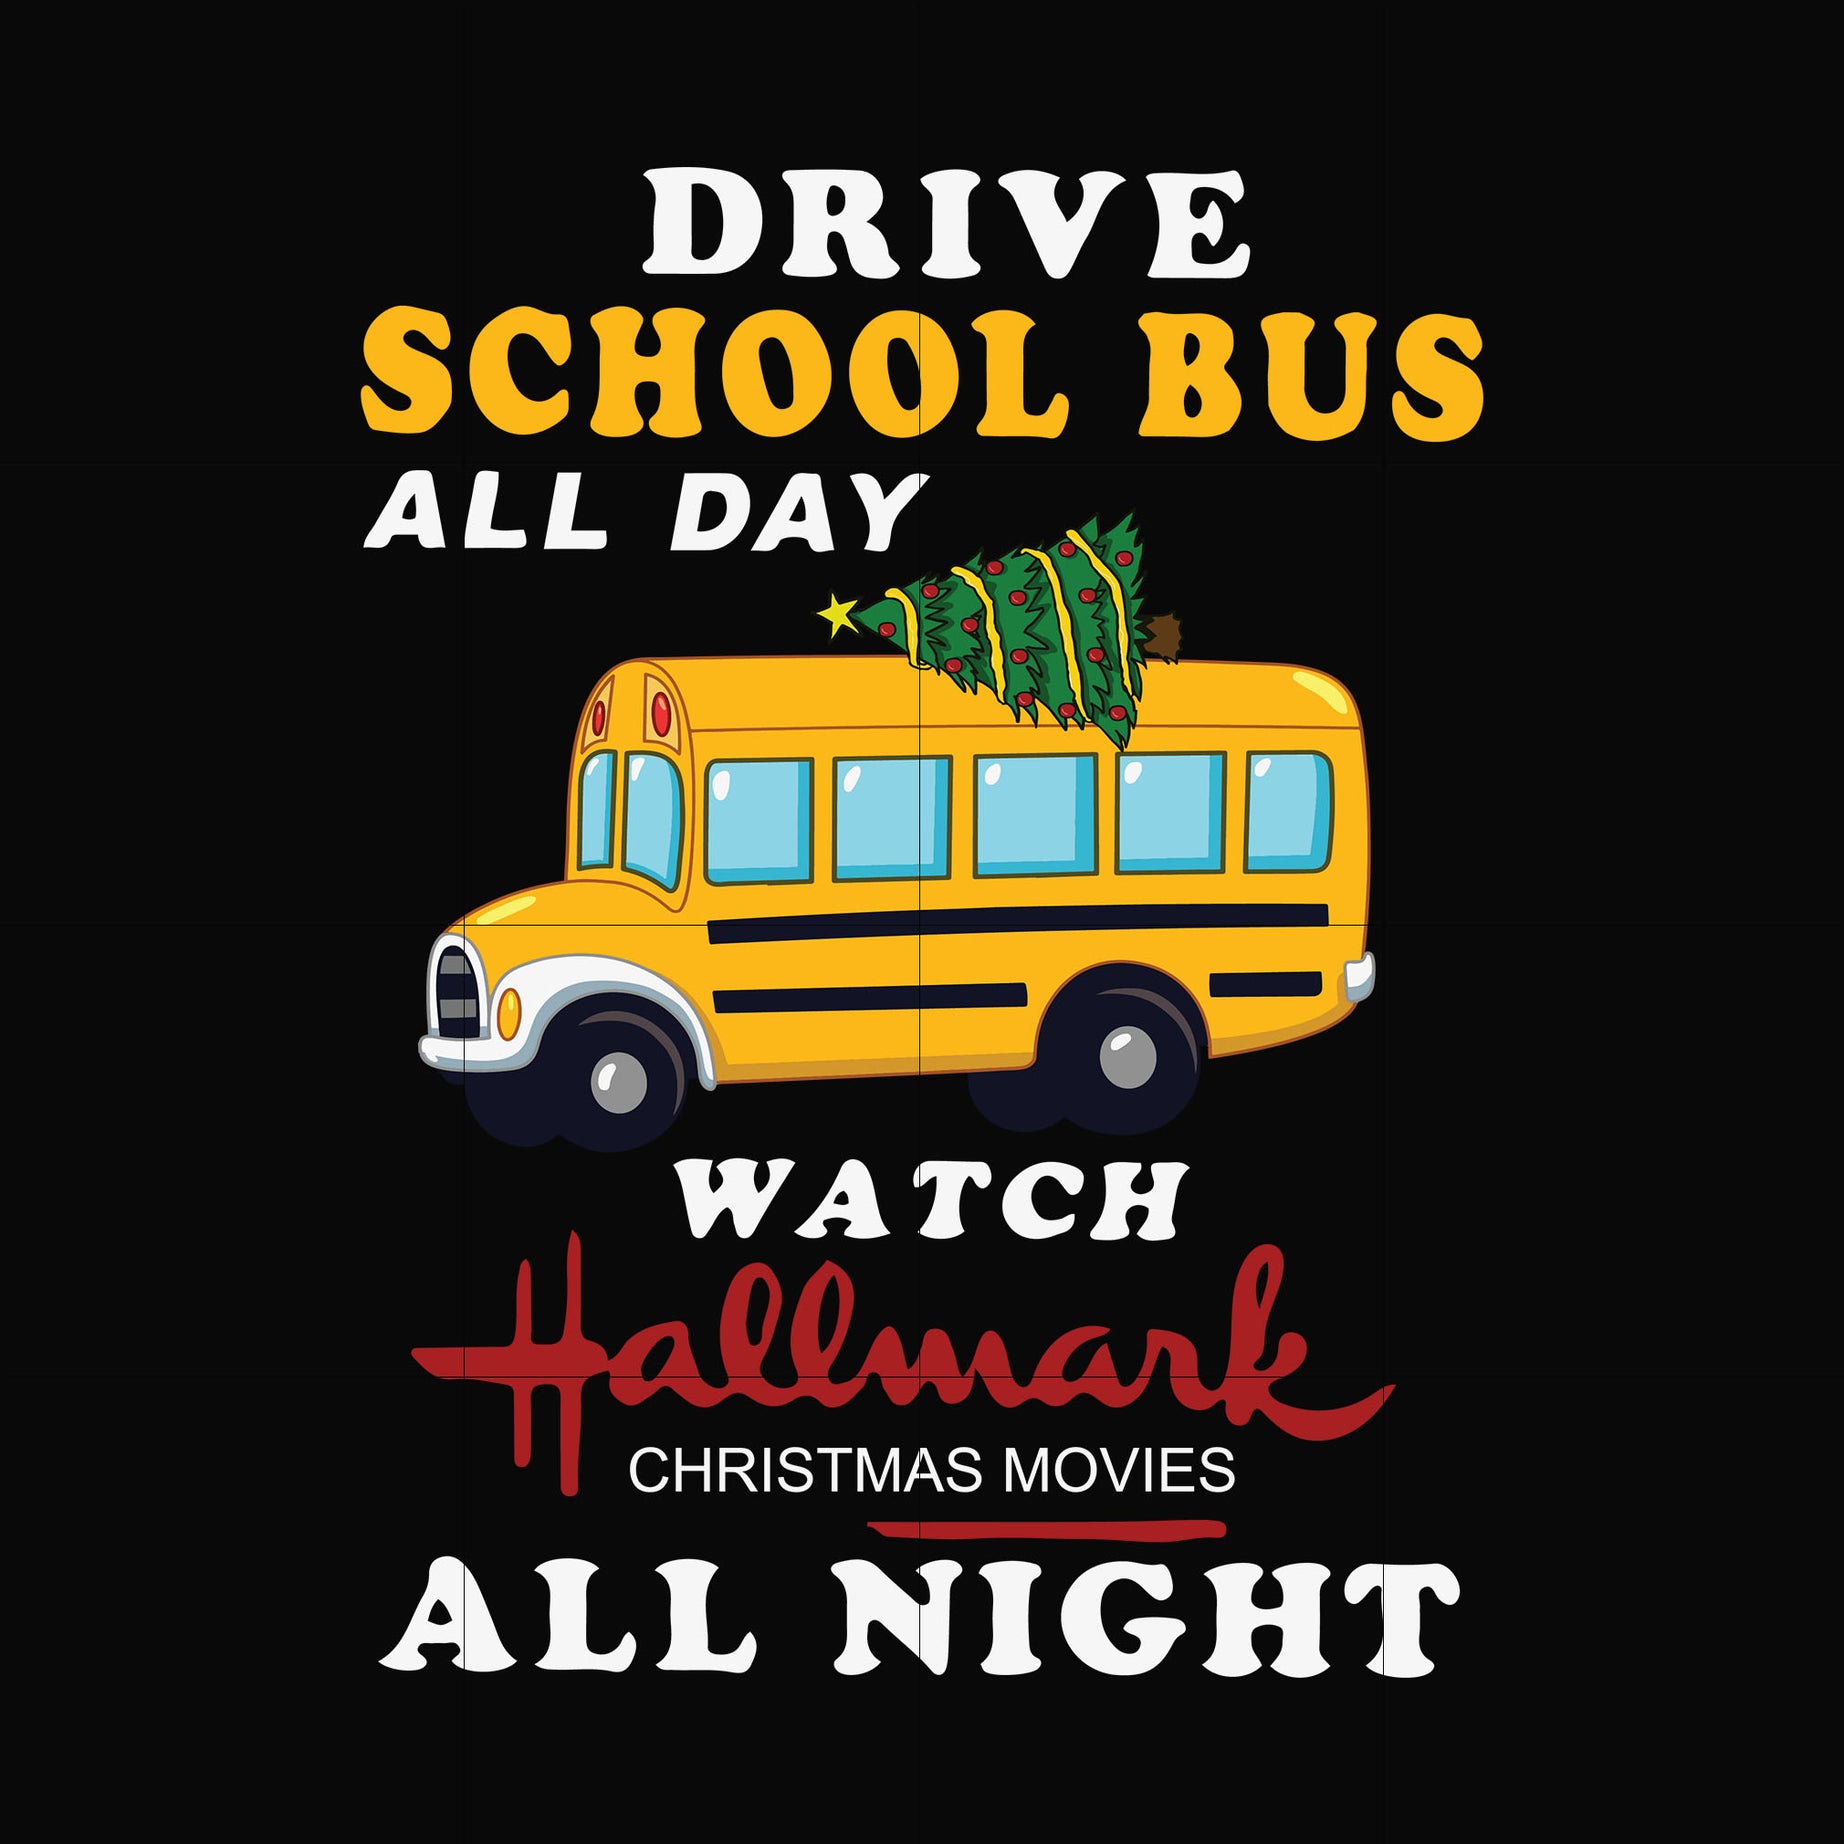 Drive school bus watch hallmark christmas movies all night svg, png, dxf, eps digital file NCRM1507207